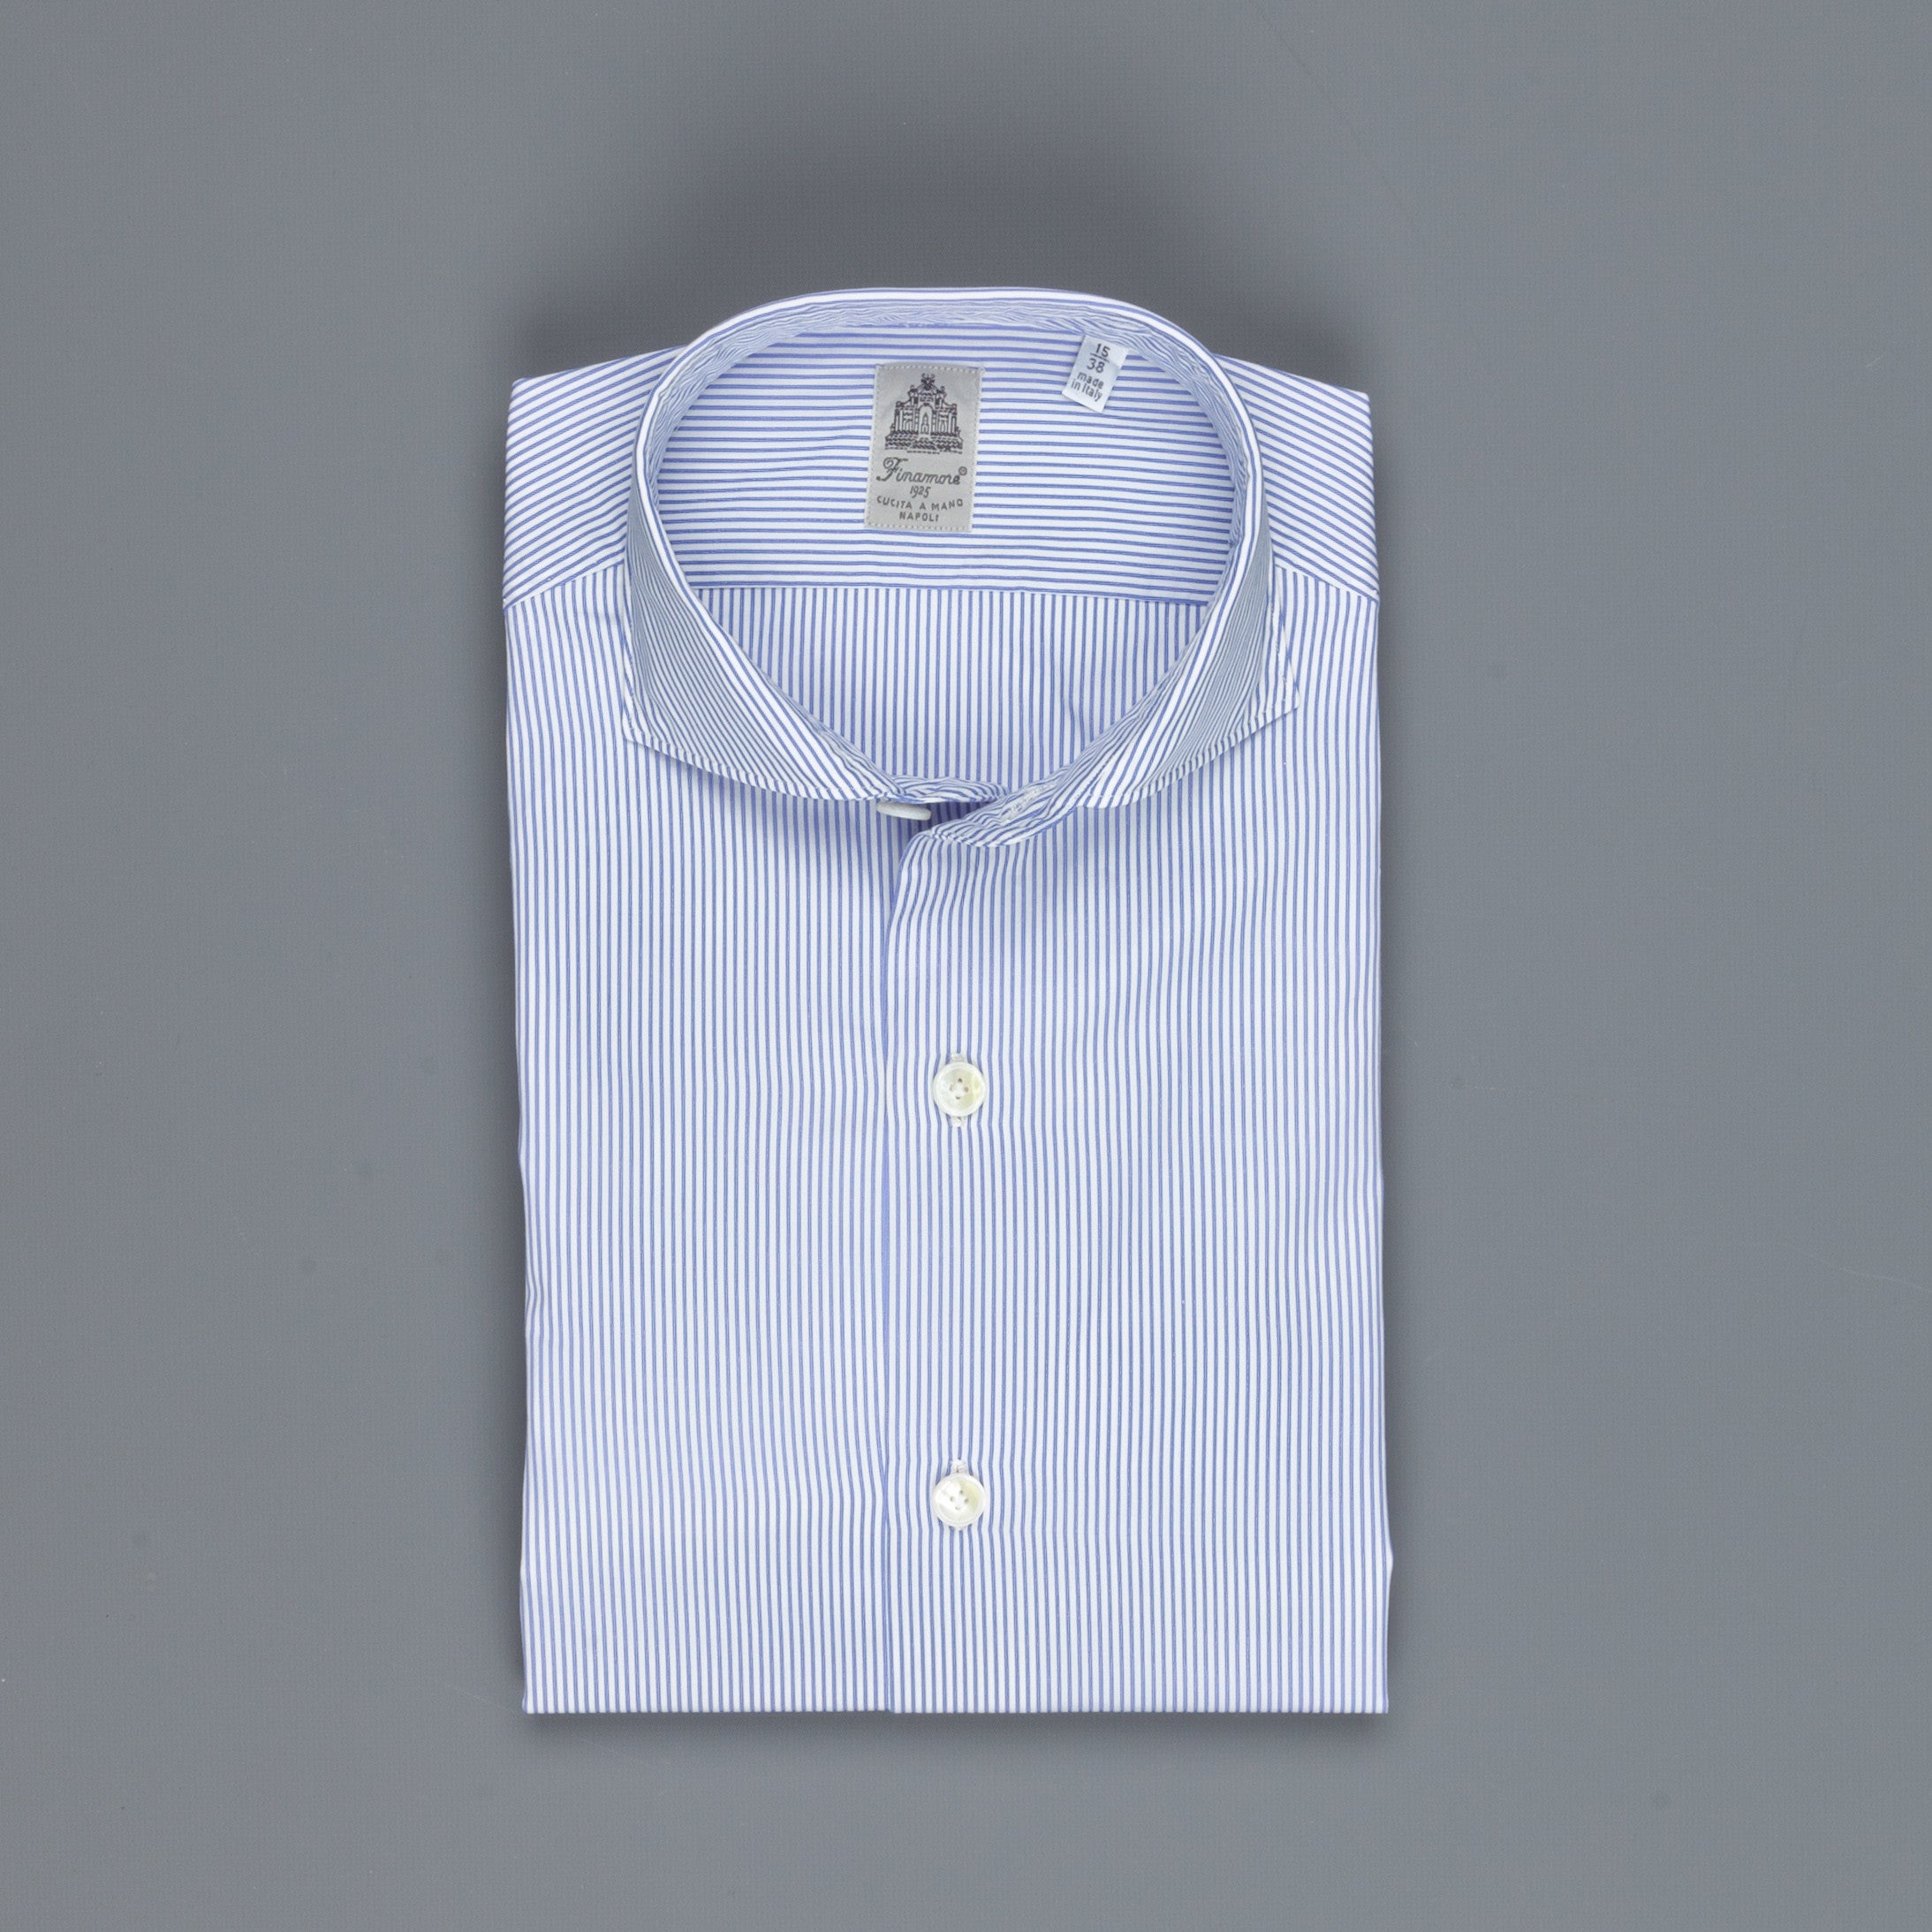 Finamore Seattle shirt blue bengal stripe